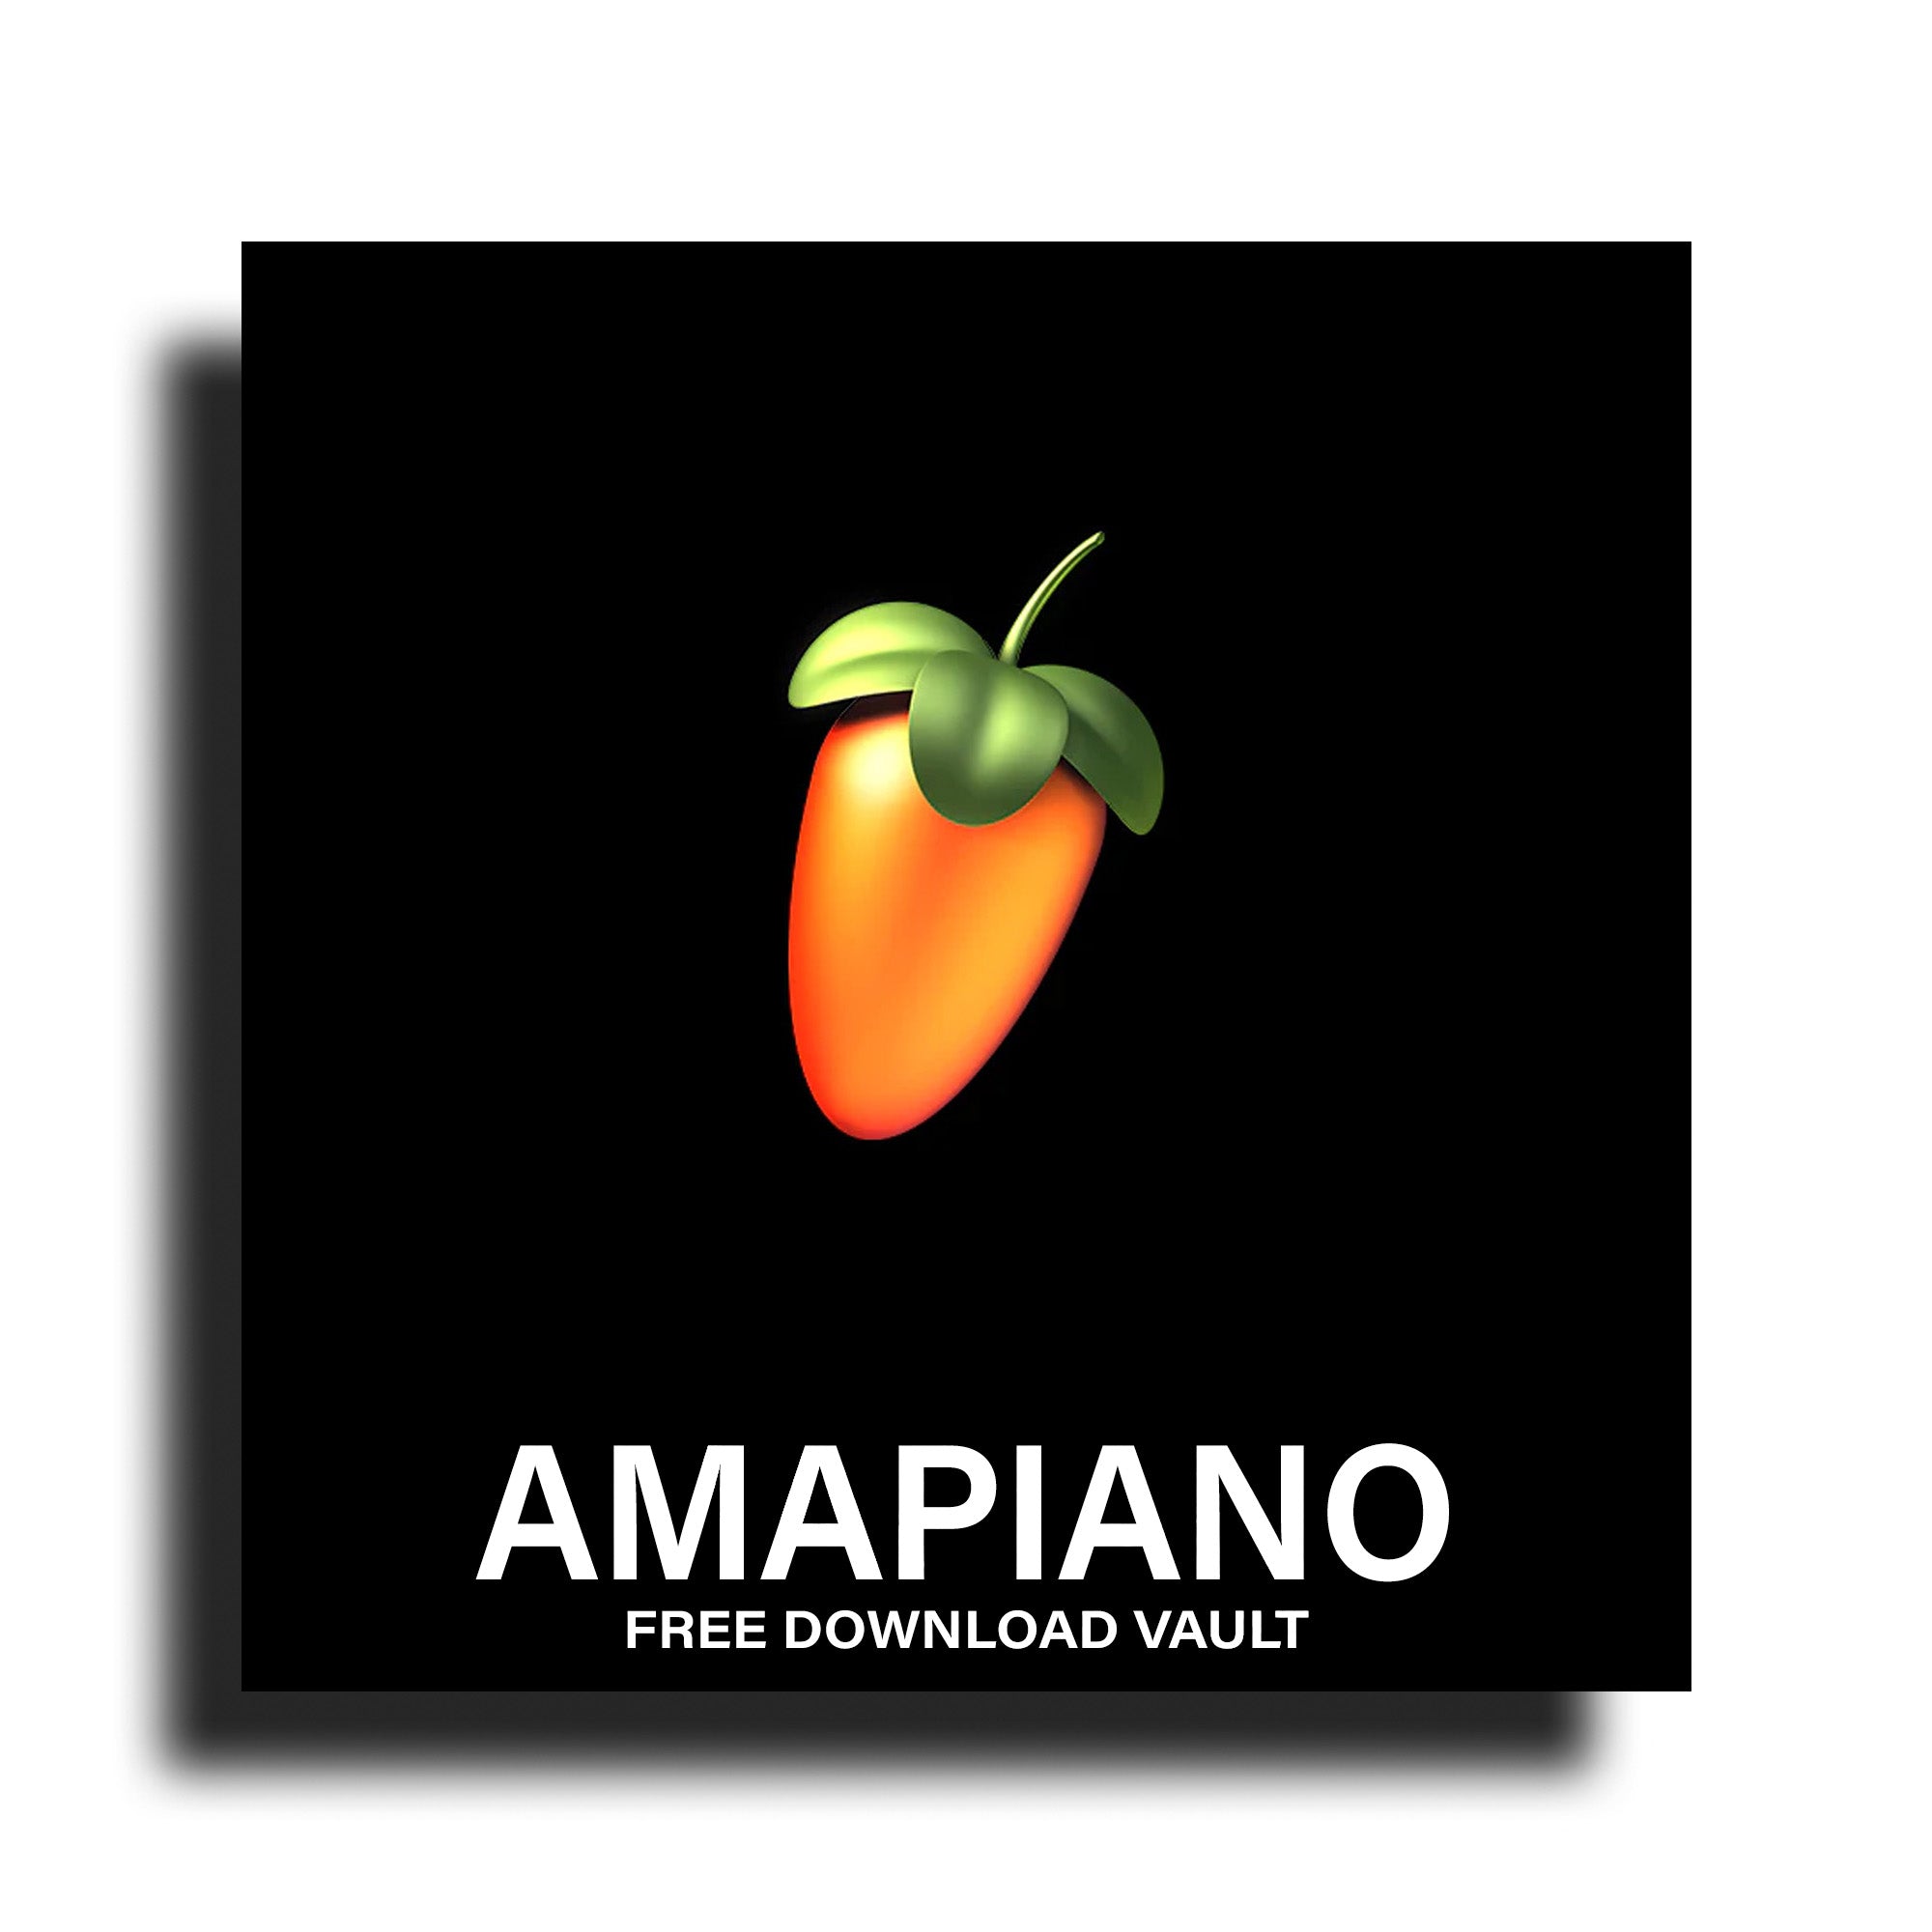 Amapiano Free Downloads Vault